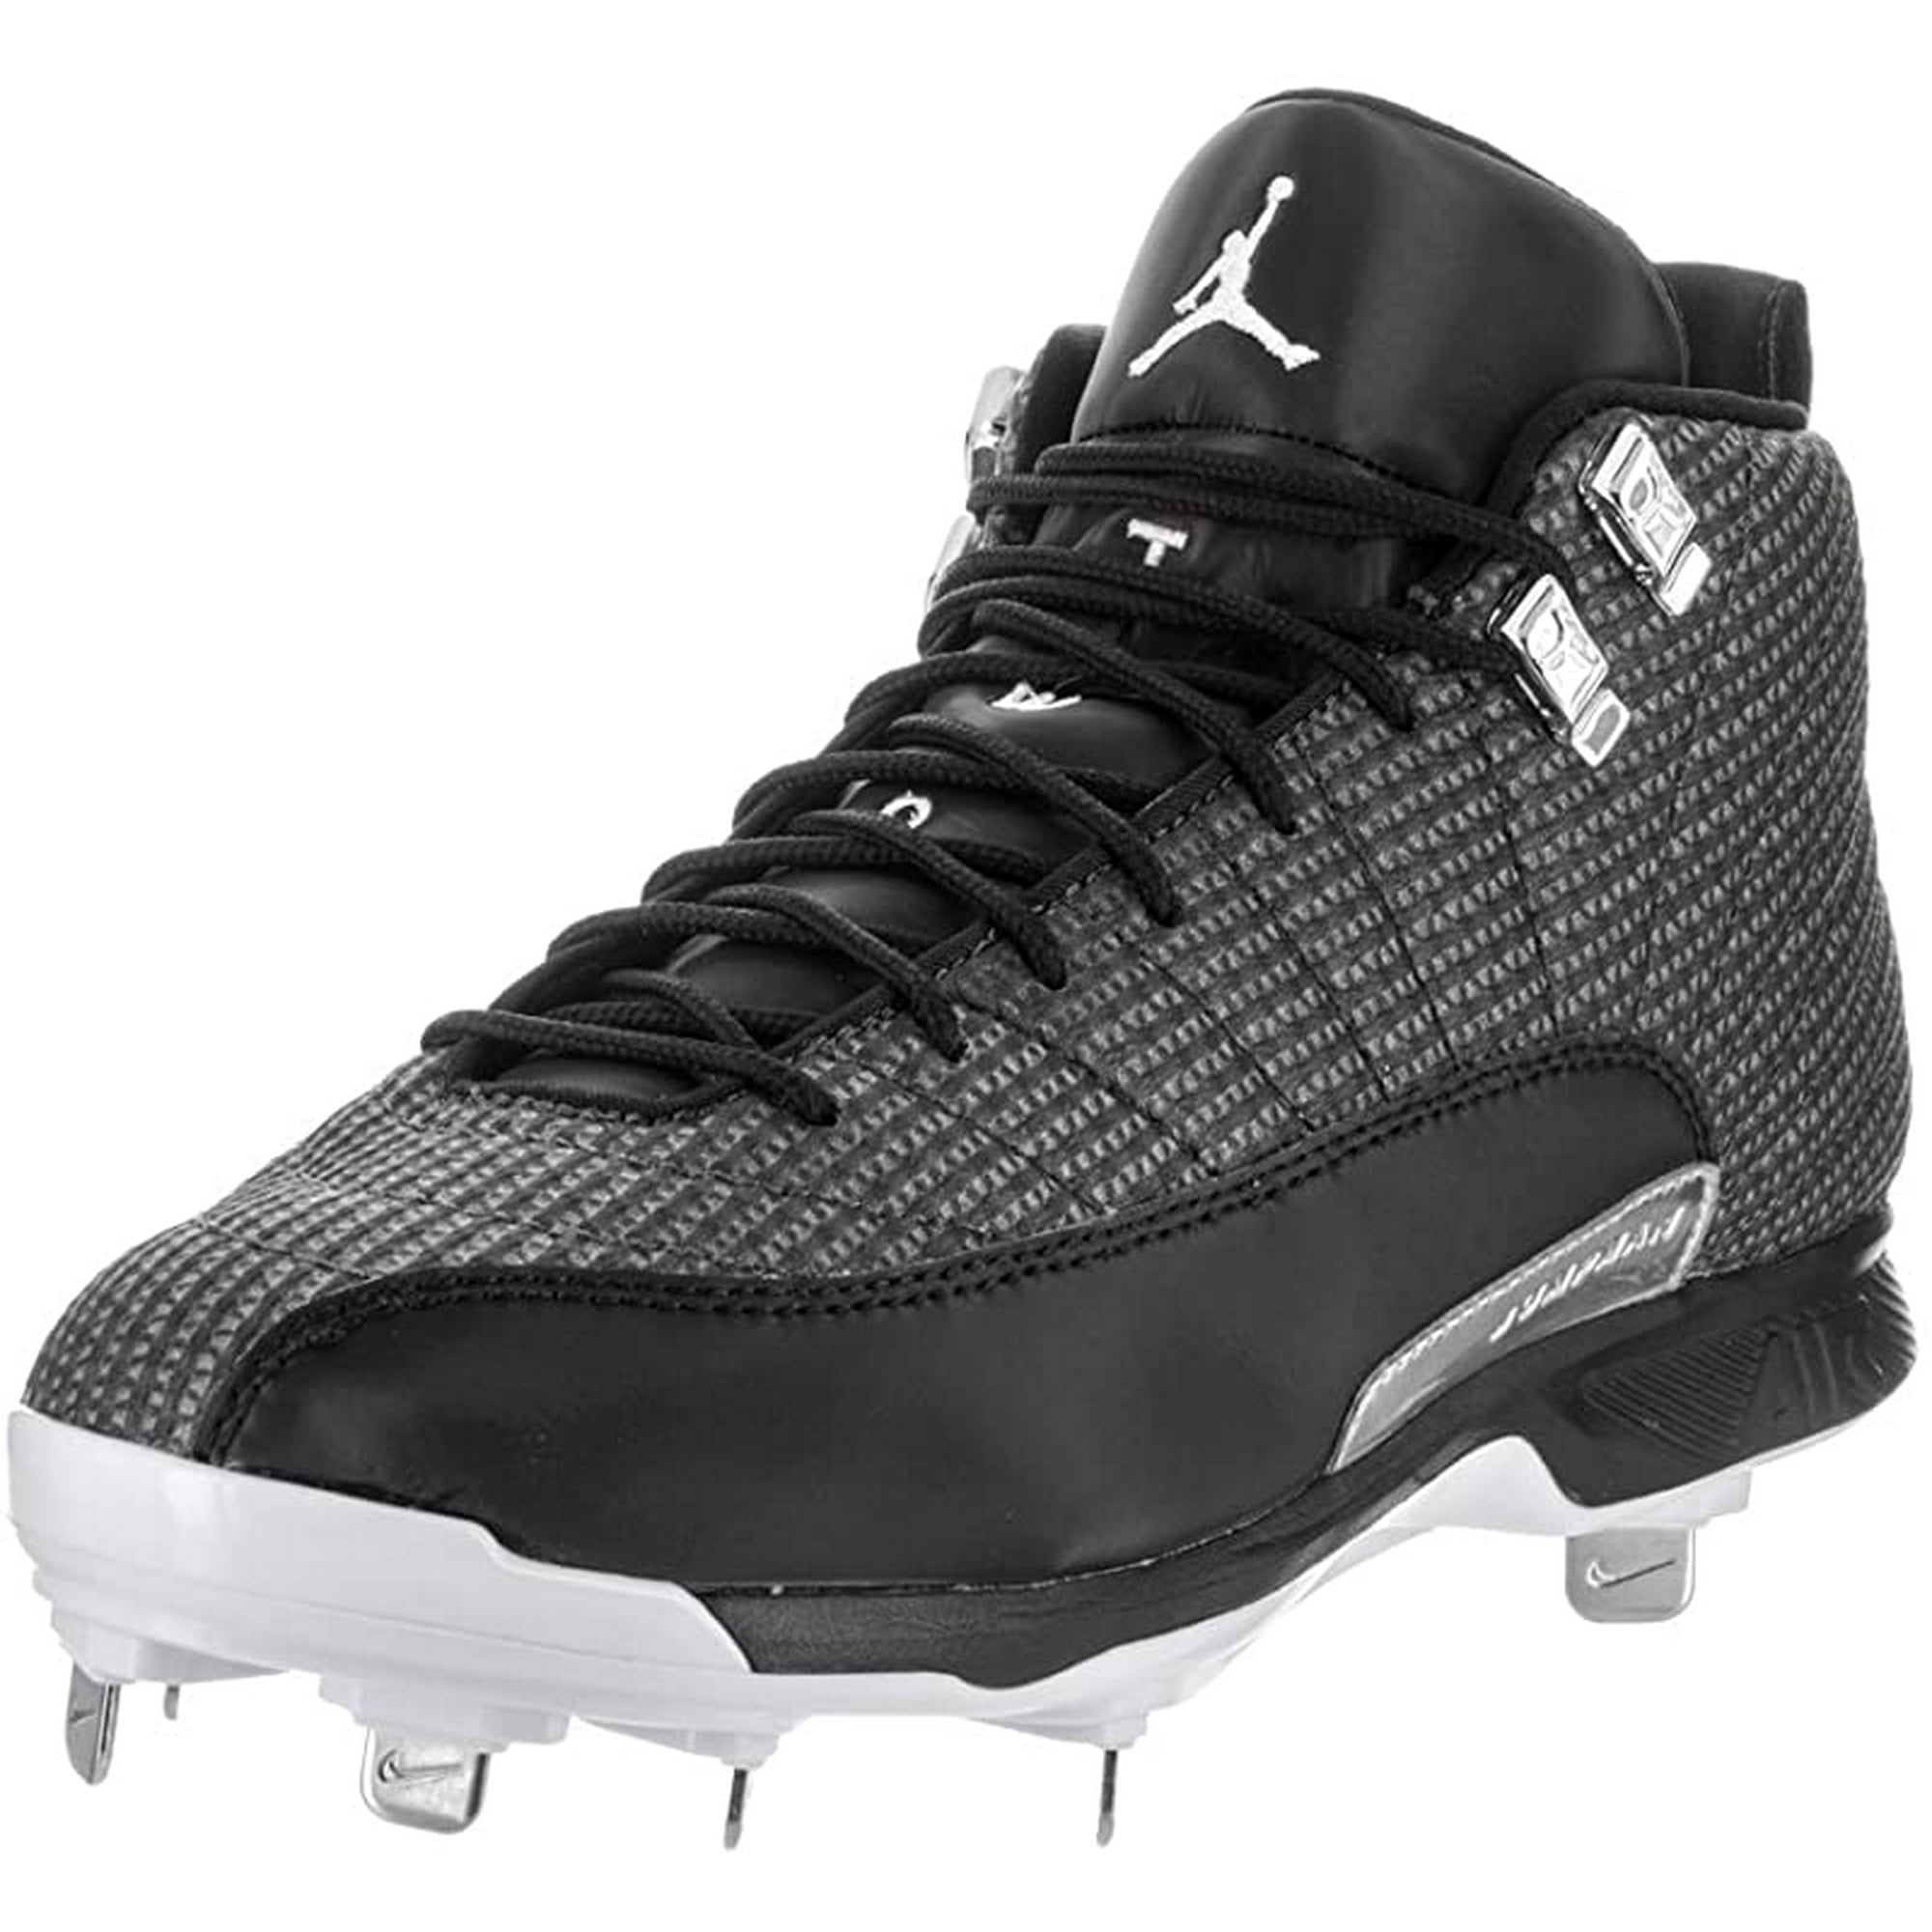 Nike Men's Jordan XII Retro Baseball Cleat, Black/White/Silver, 11